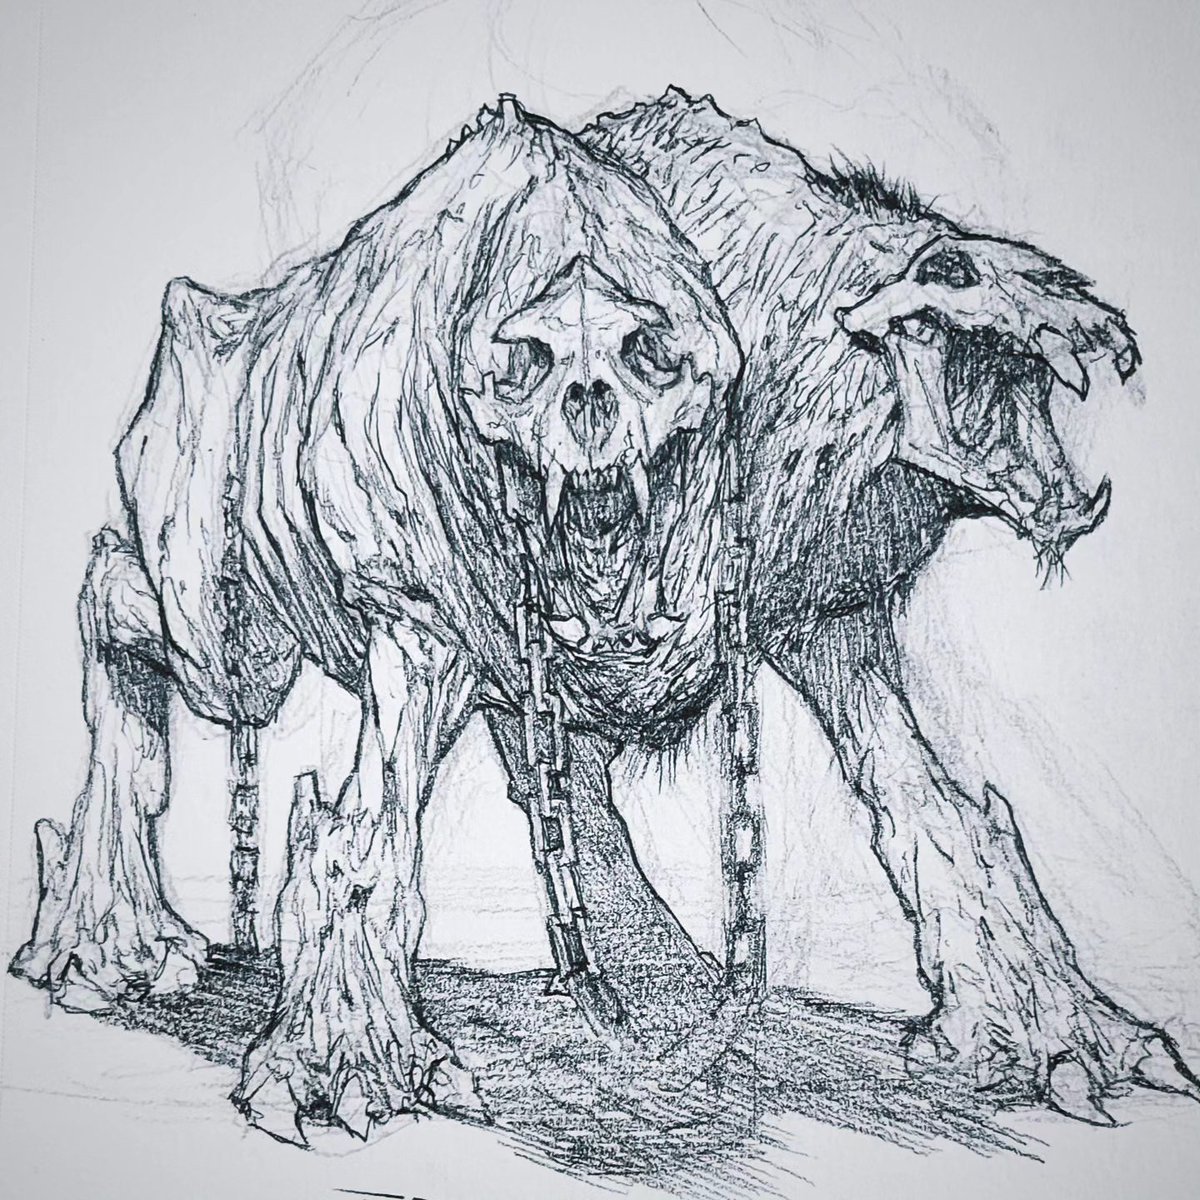 「Threw some inks on this Demonic dog, nic」|Christian DiBariのイラスト